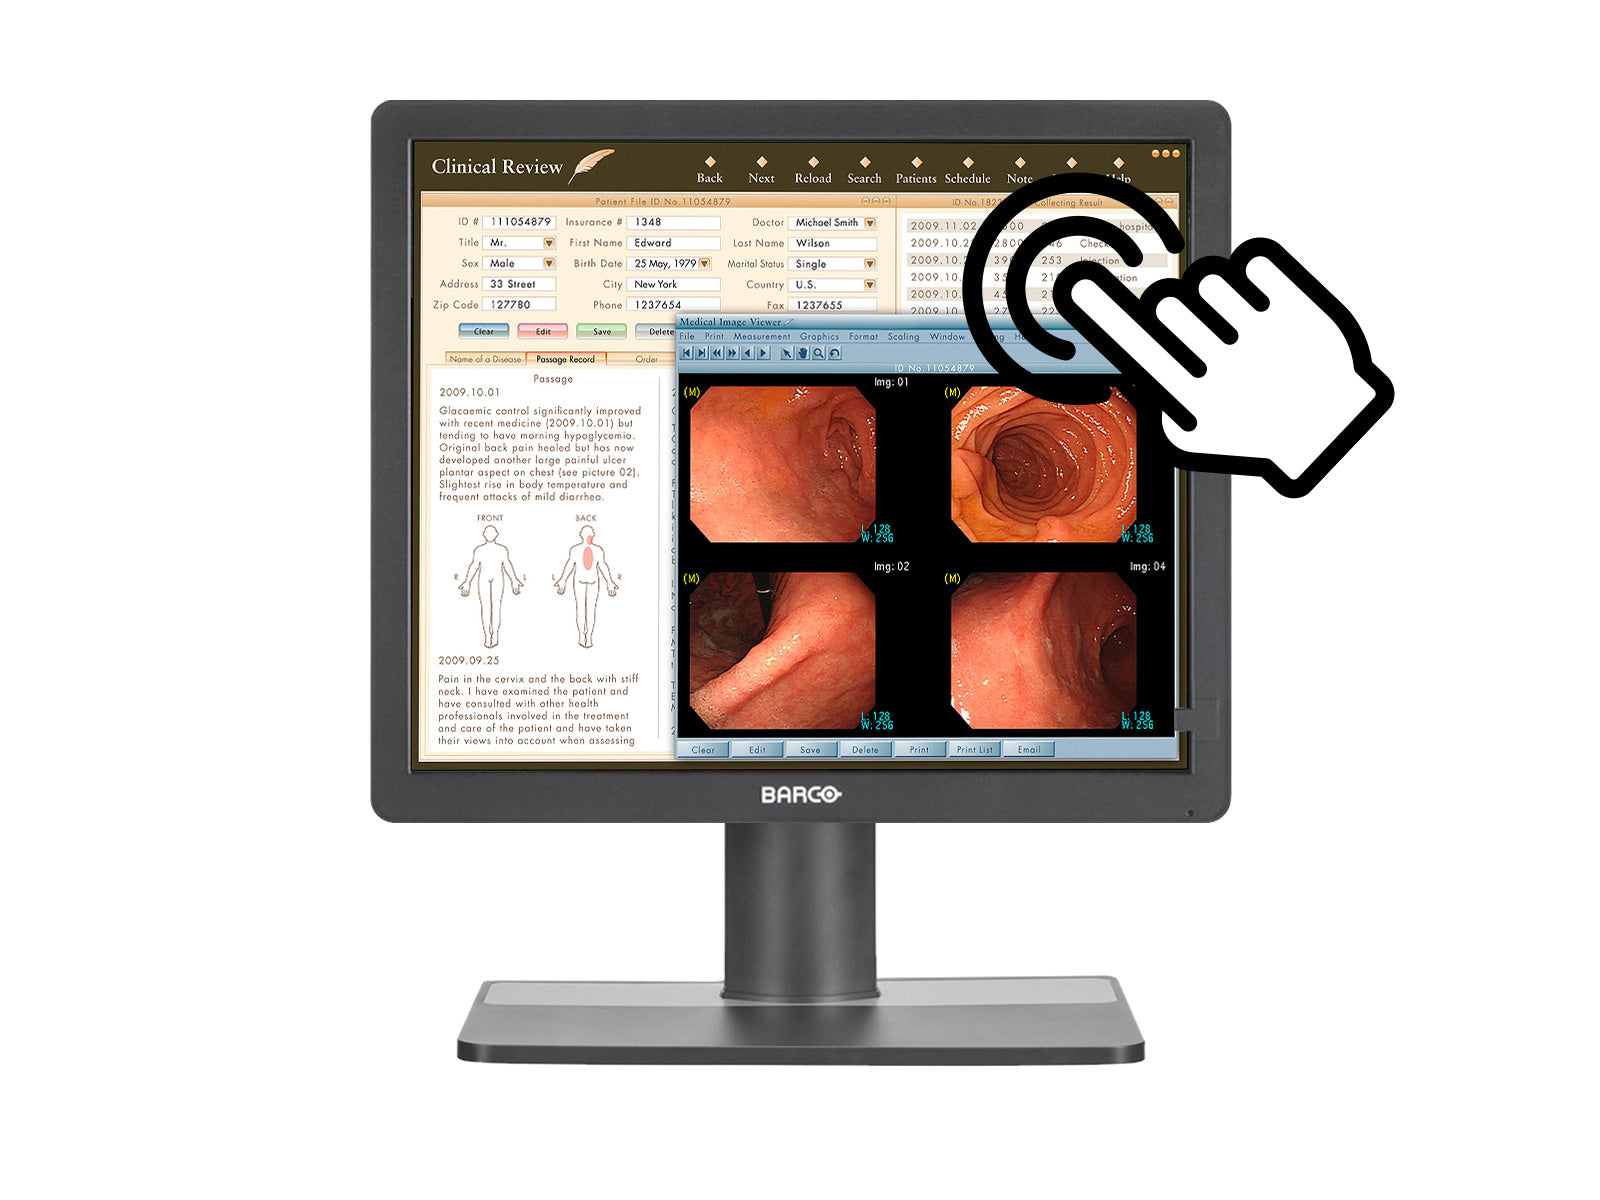 Barco MDRC-1219 TS 1MP 19 インチ カラー タッチスクリーン臨床レビュー ディスプレイ (K9301821A) Monitors.com